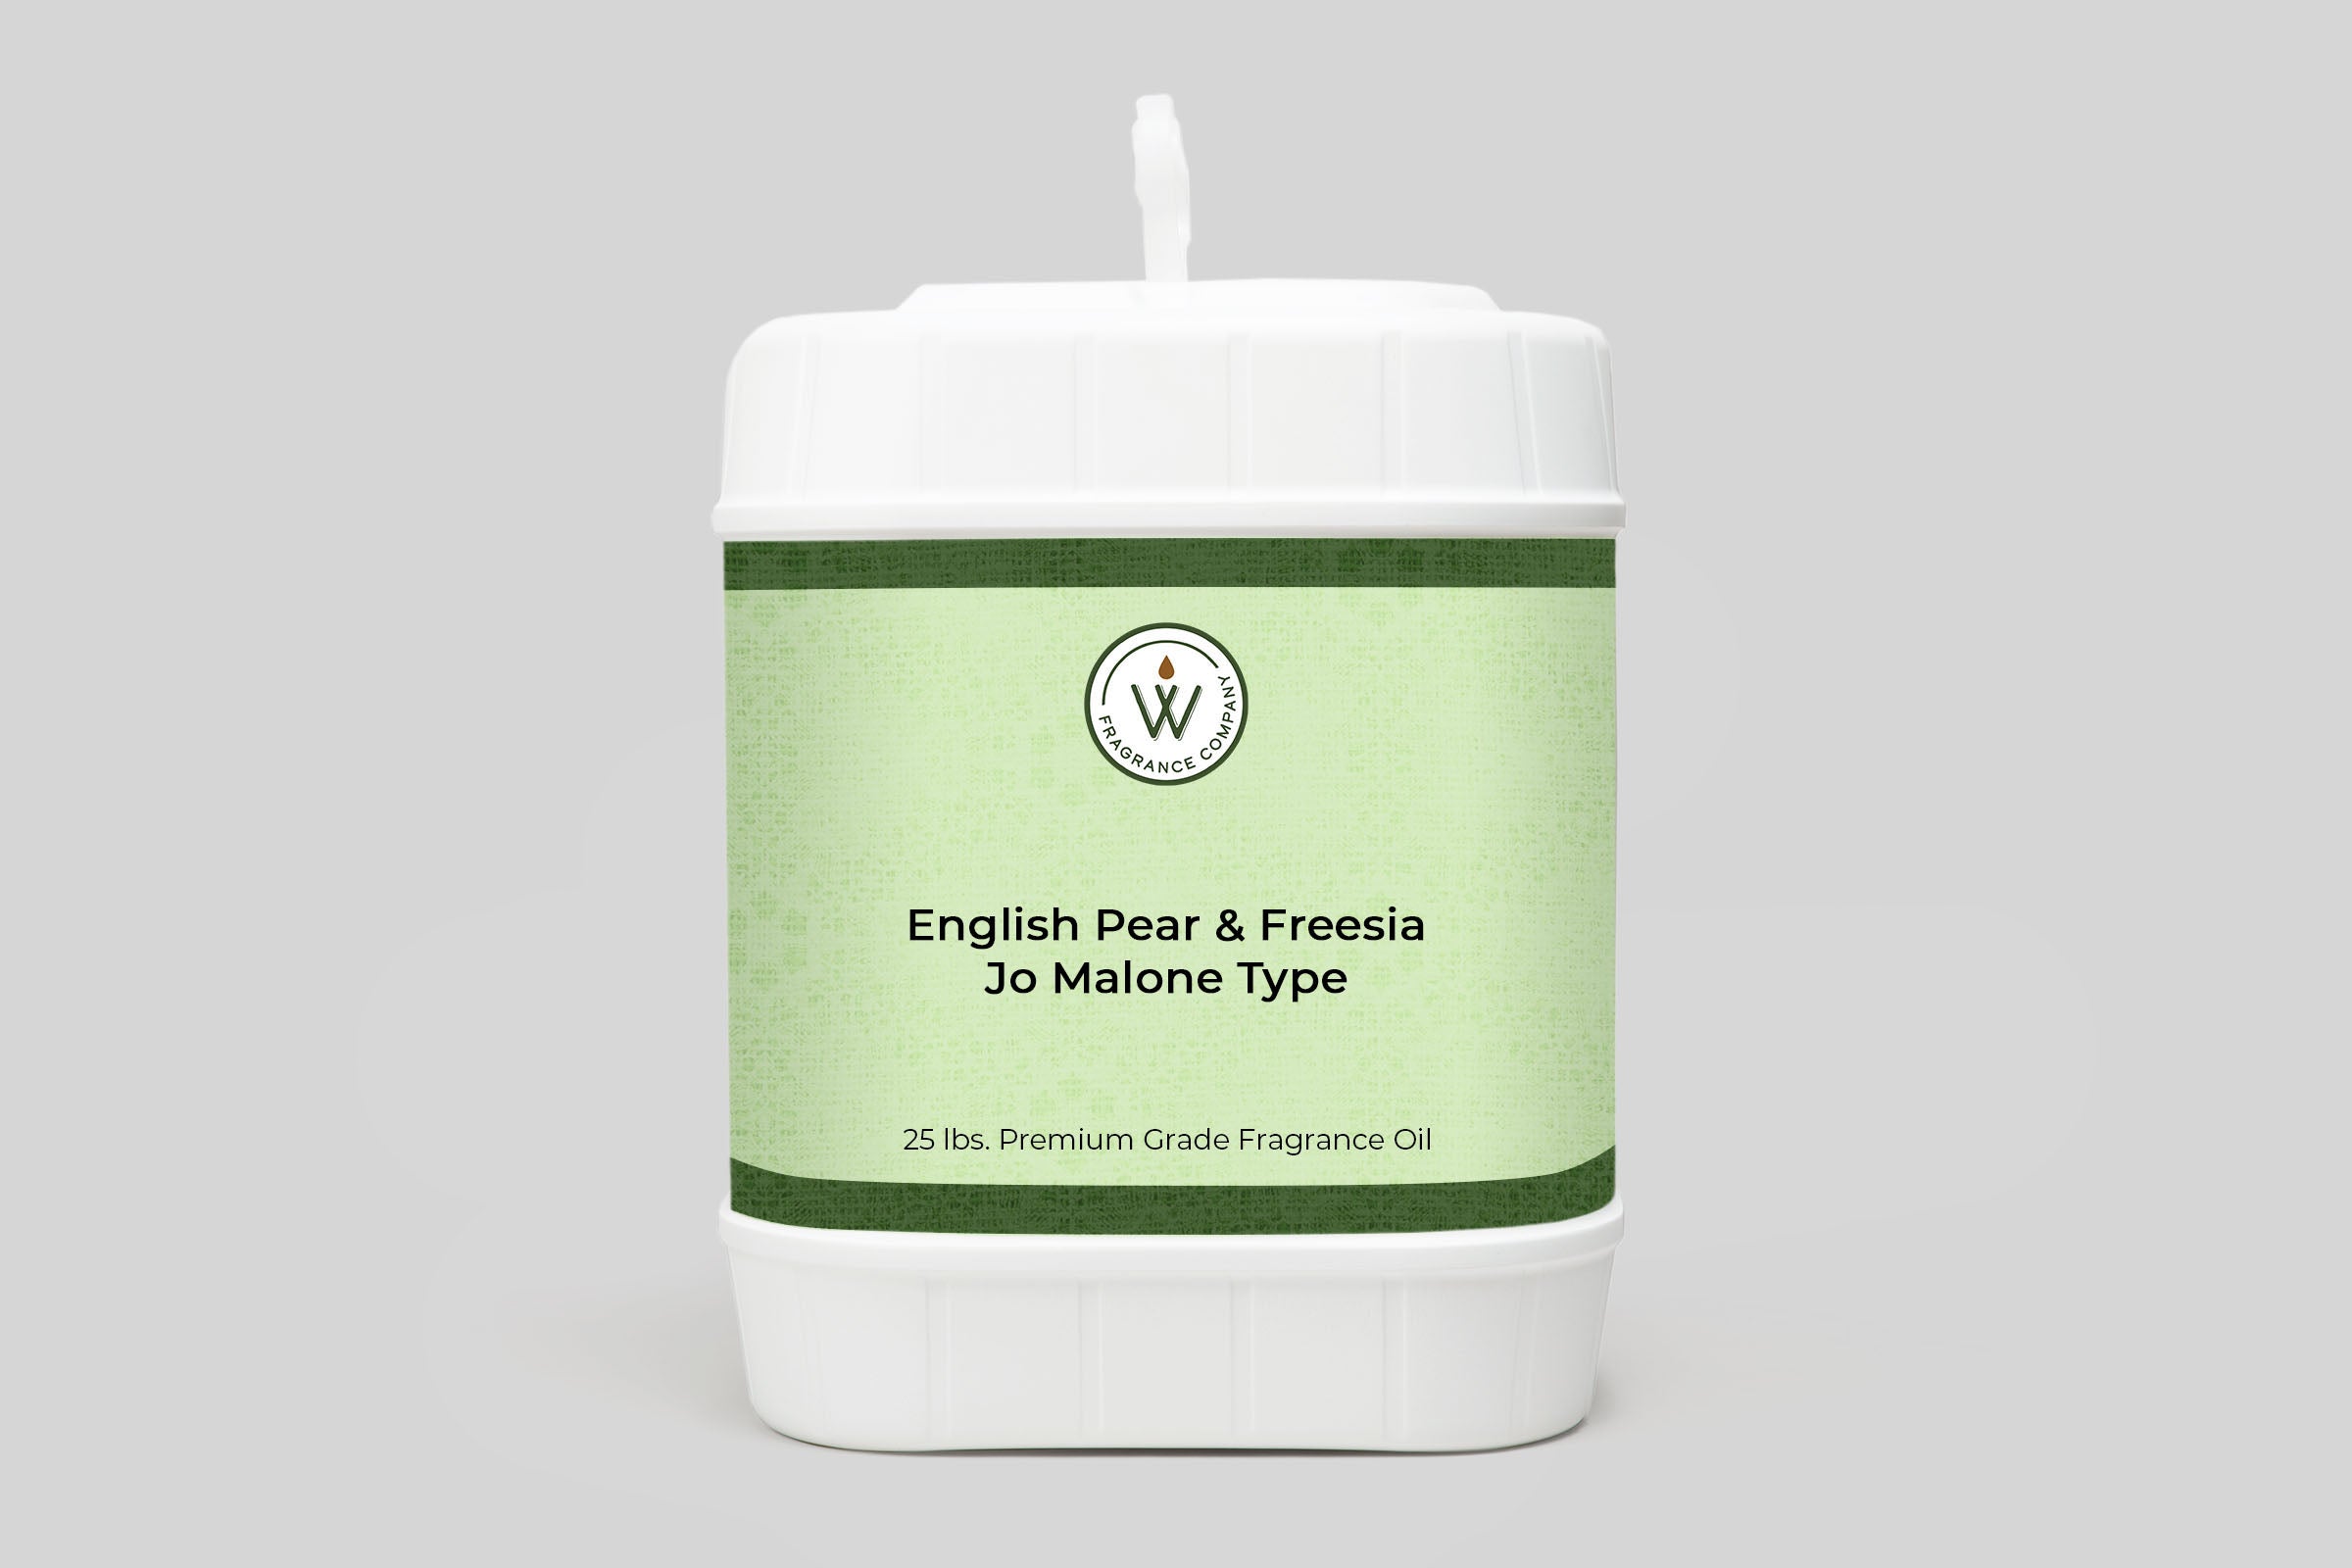 English Pear & Freesia Jo Malone Type Fragrance Oil